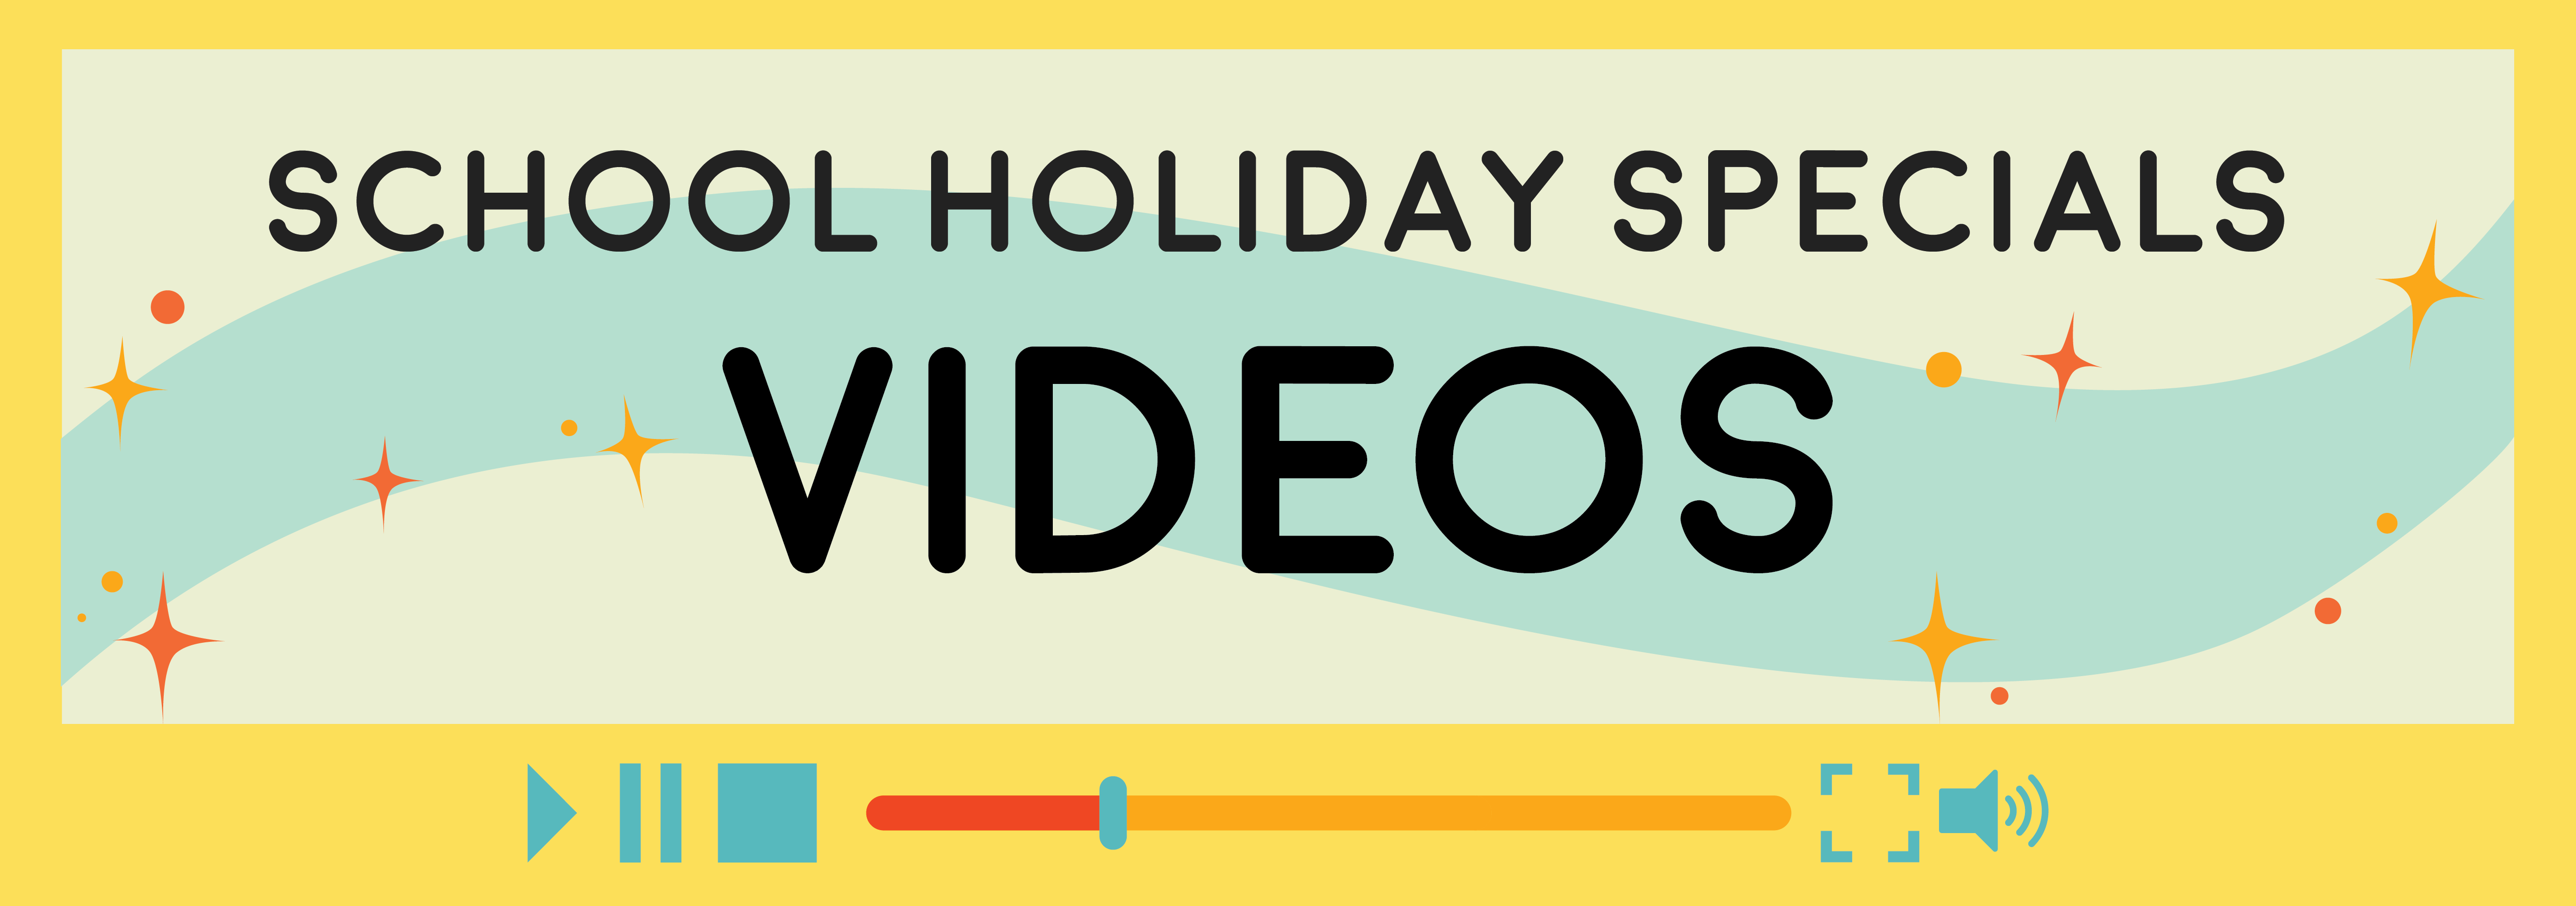 School Holiday Special Videos header